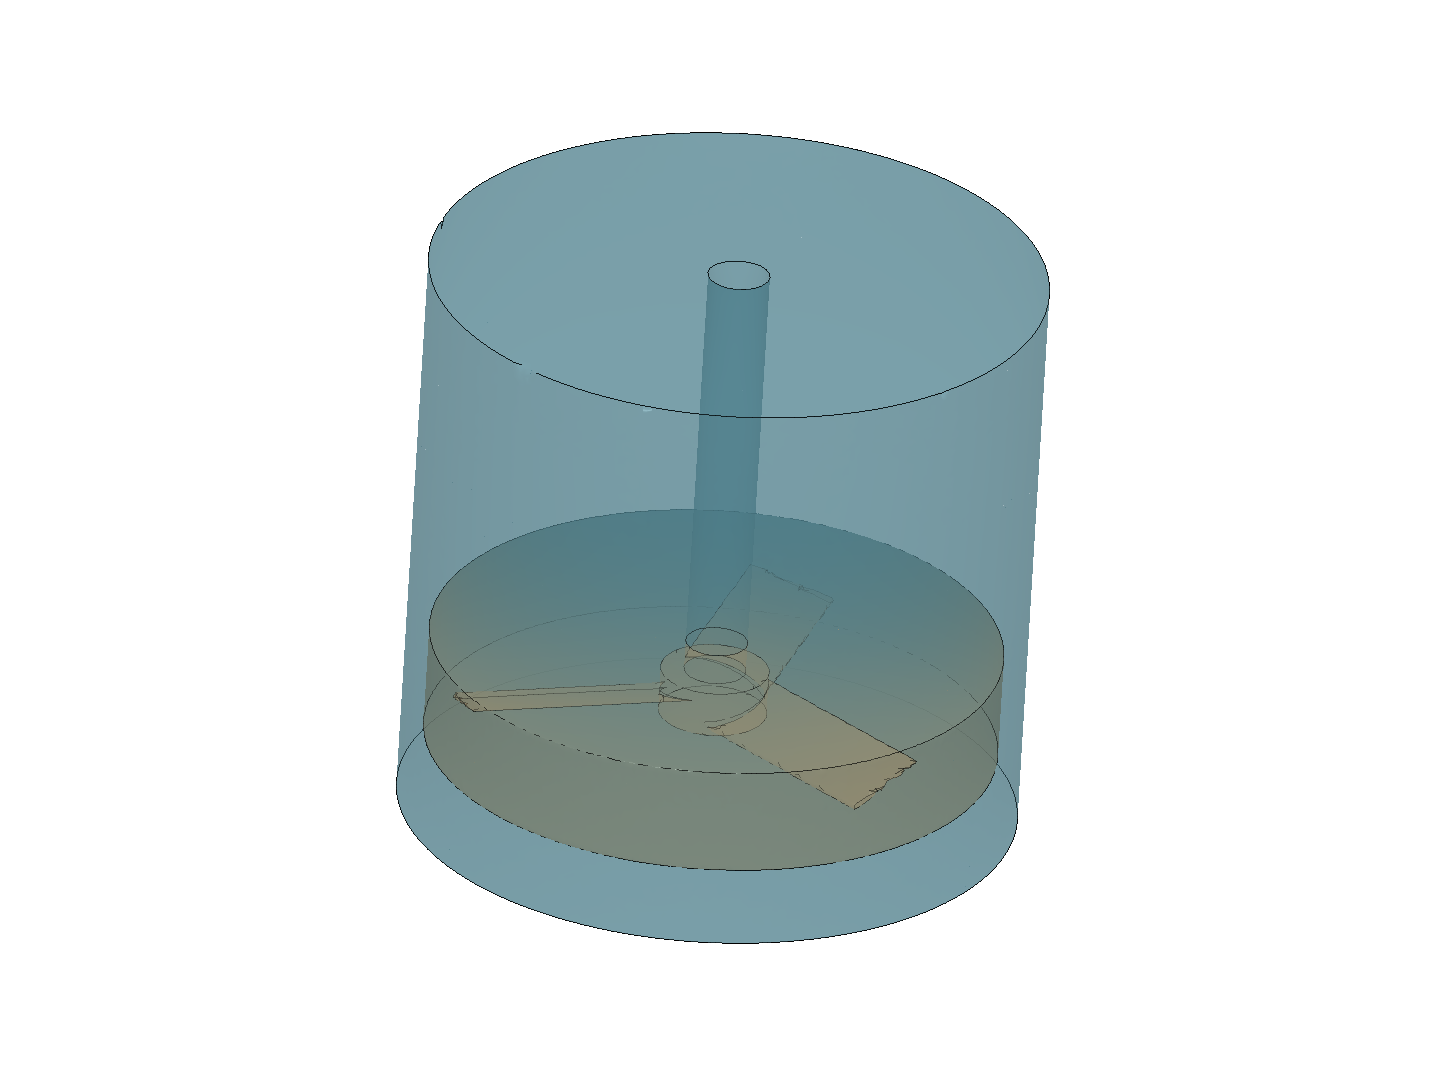 Stirred reactor free surface flow image